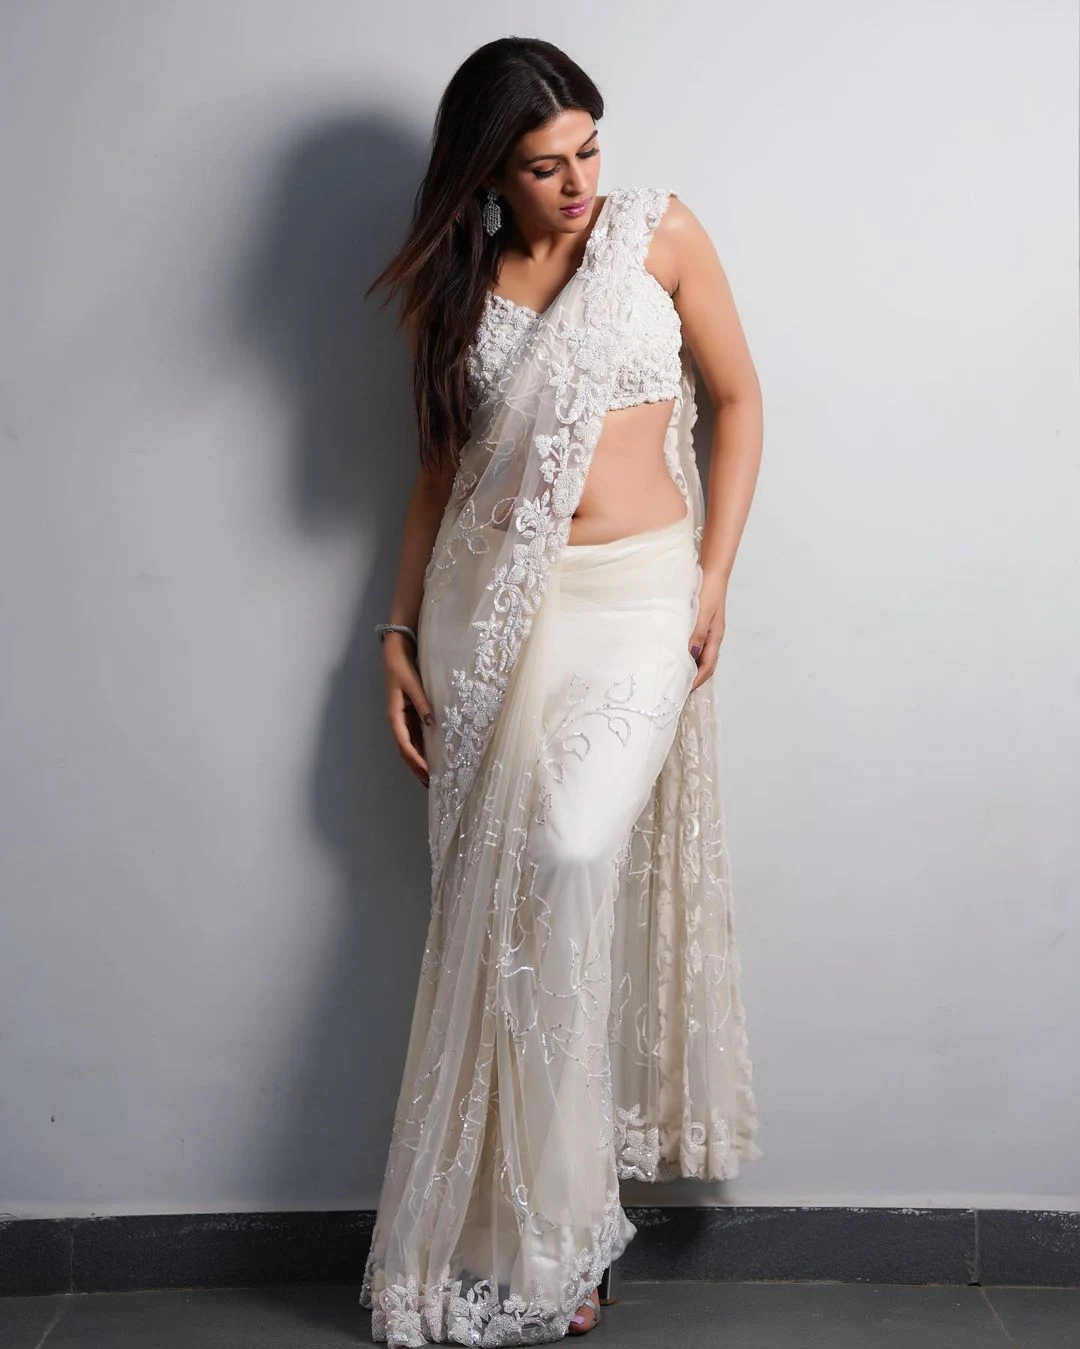 Shraddha Das navel white saree hot actress